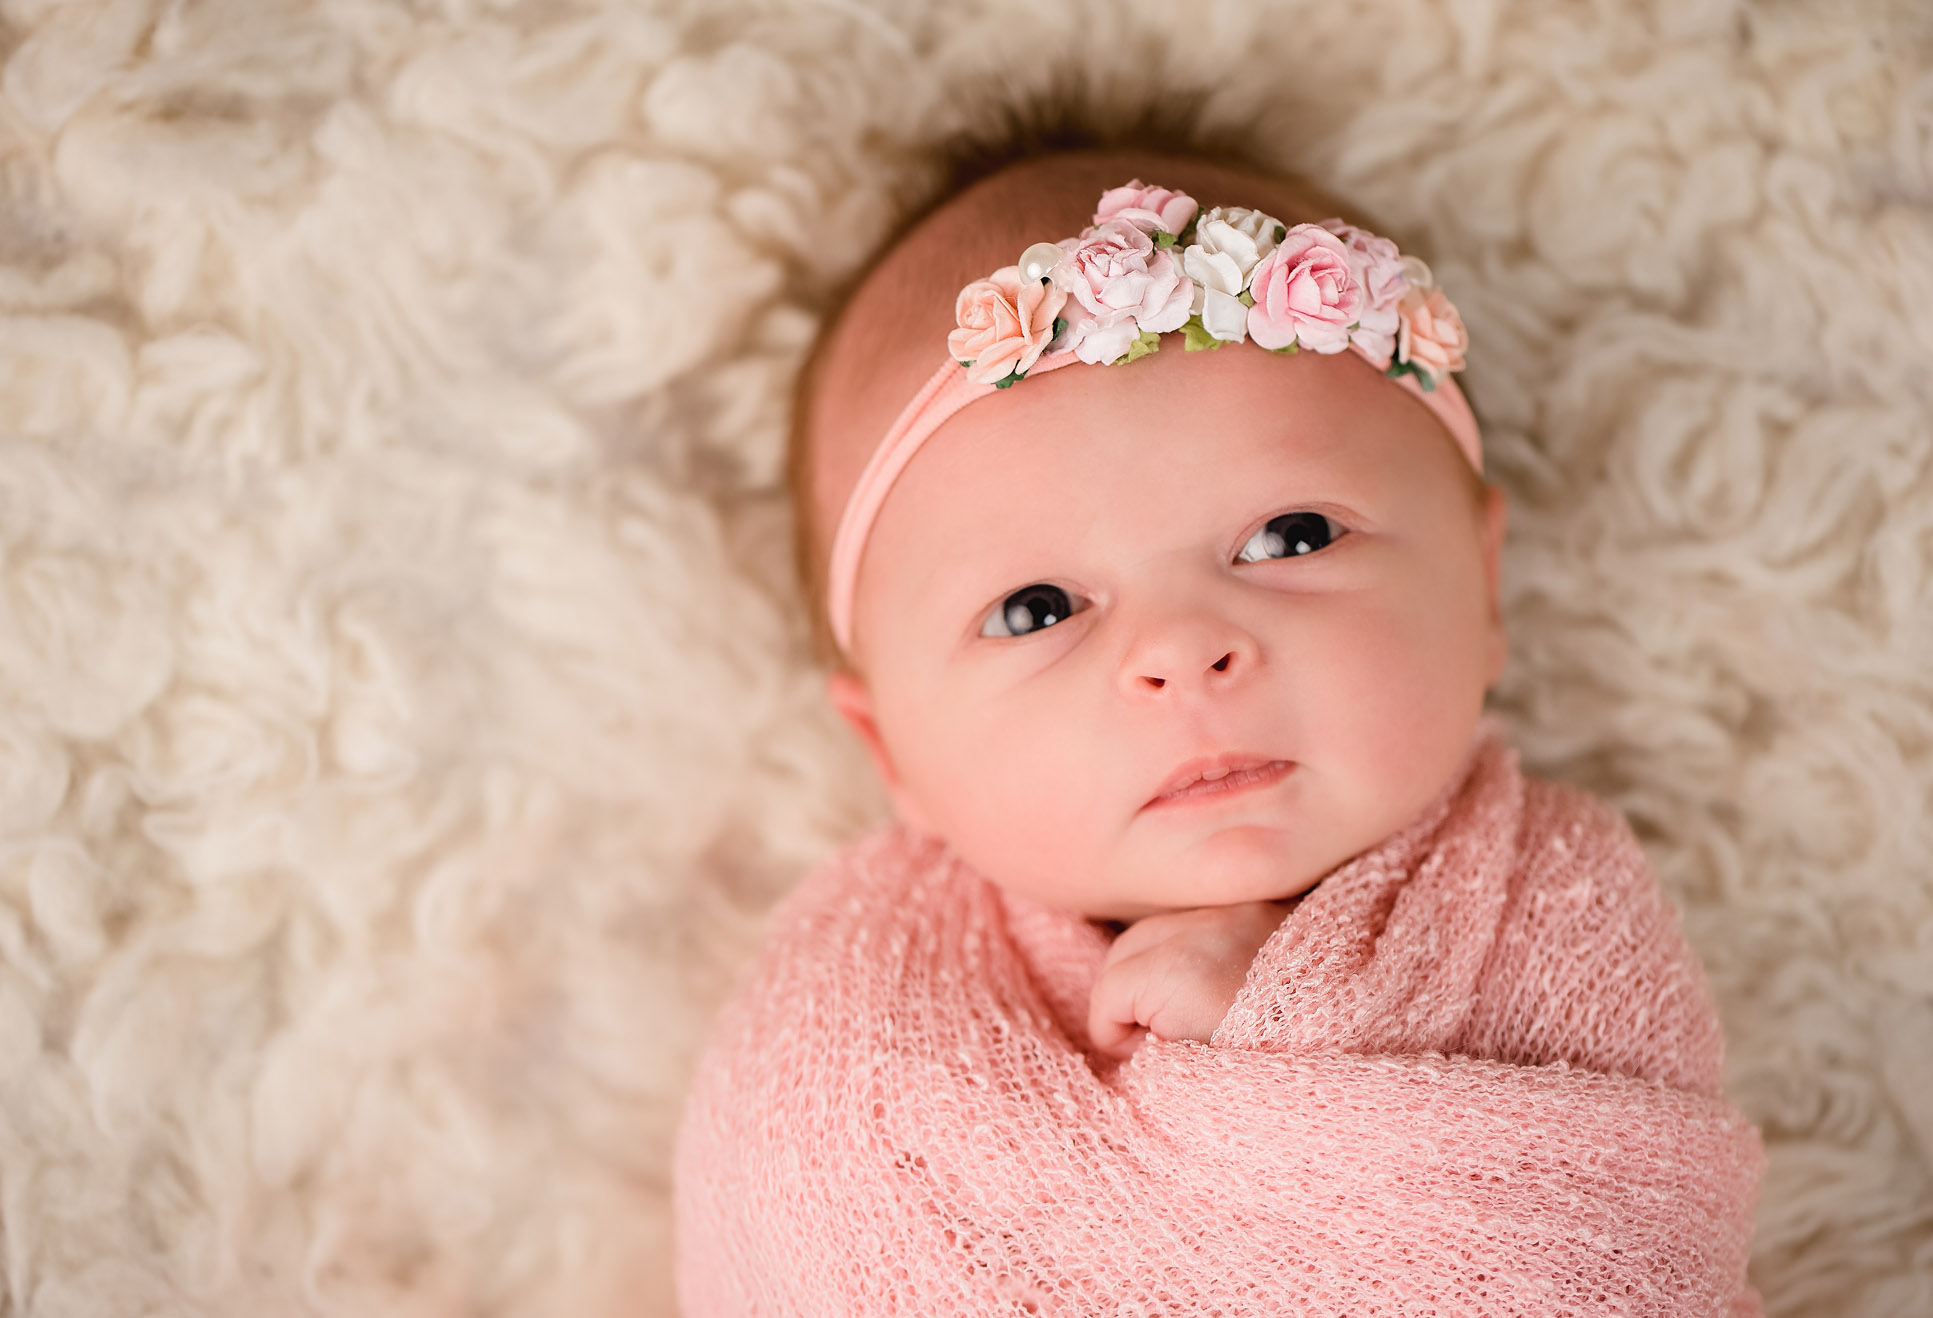 McMann 1 - Portfolio: Infant Photography